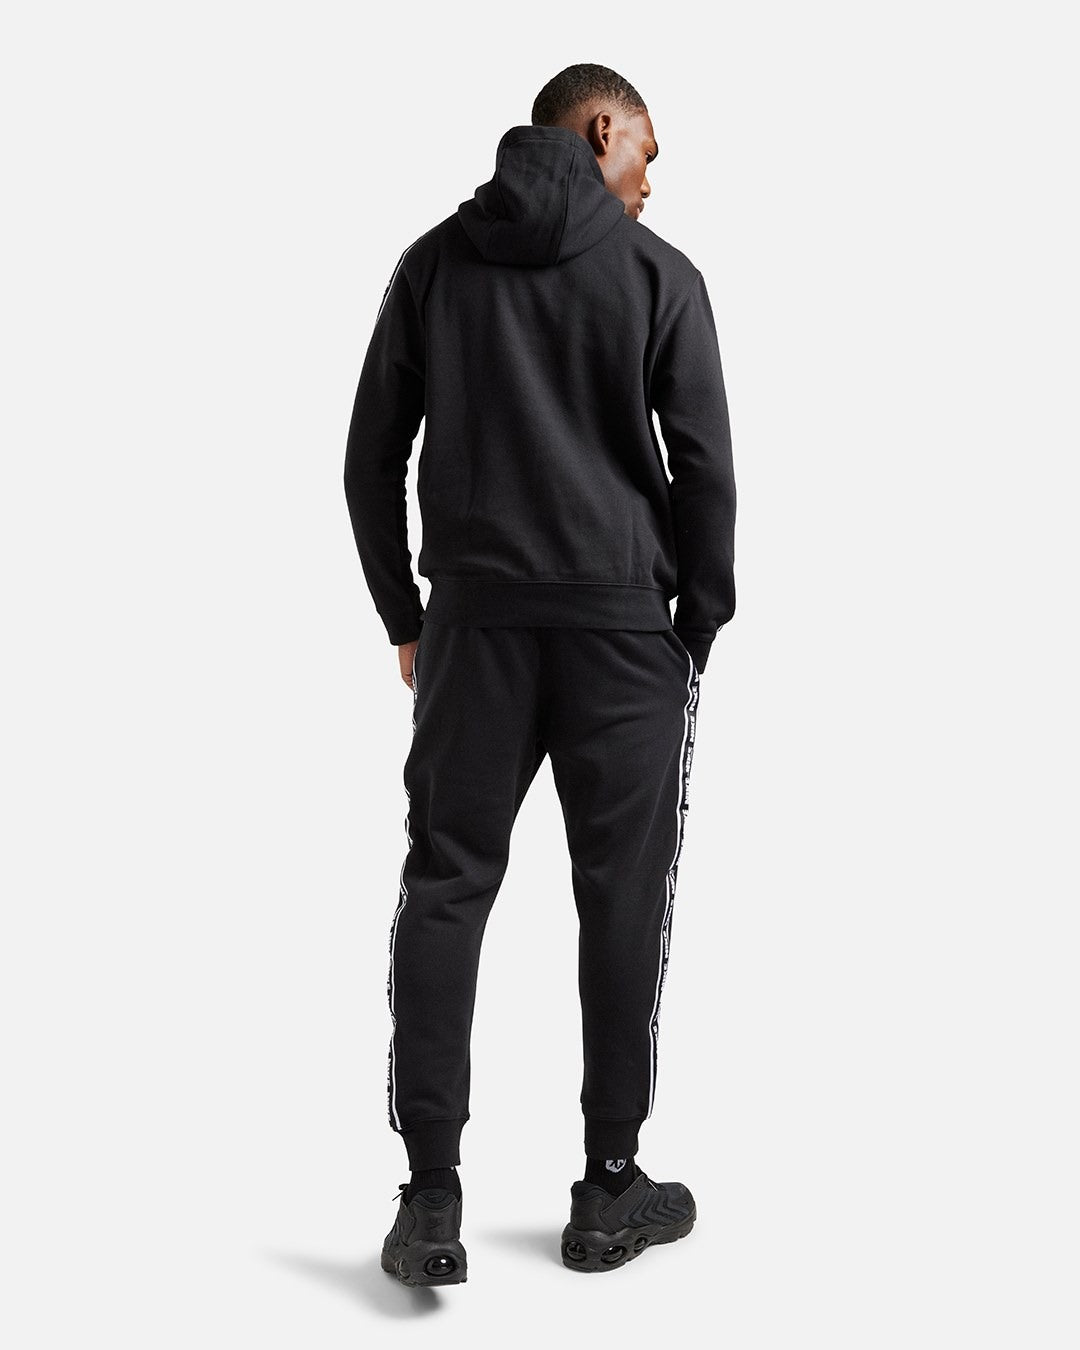 Survêtement Nike Fleece - Noir/Blanc